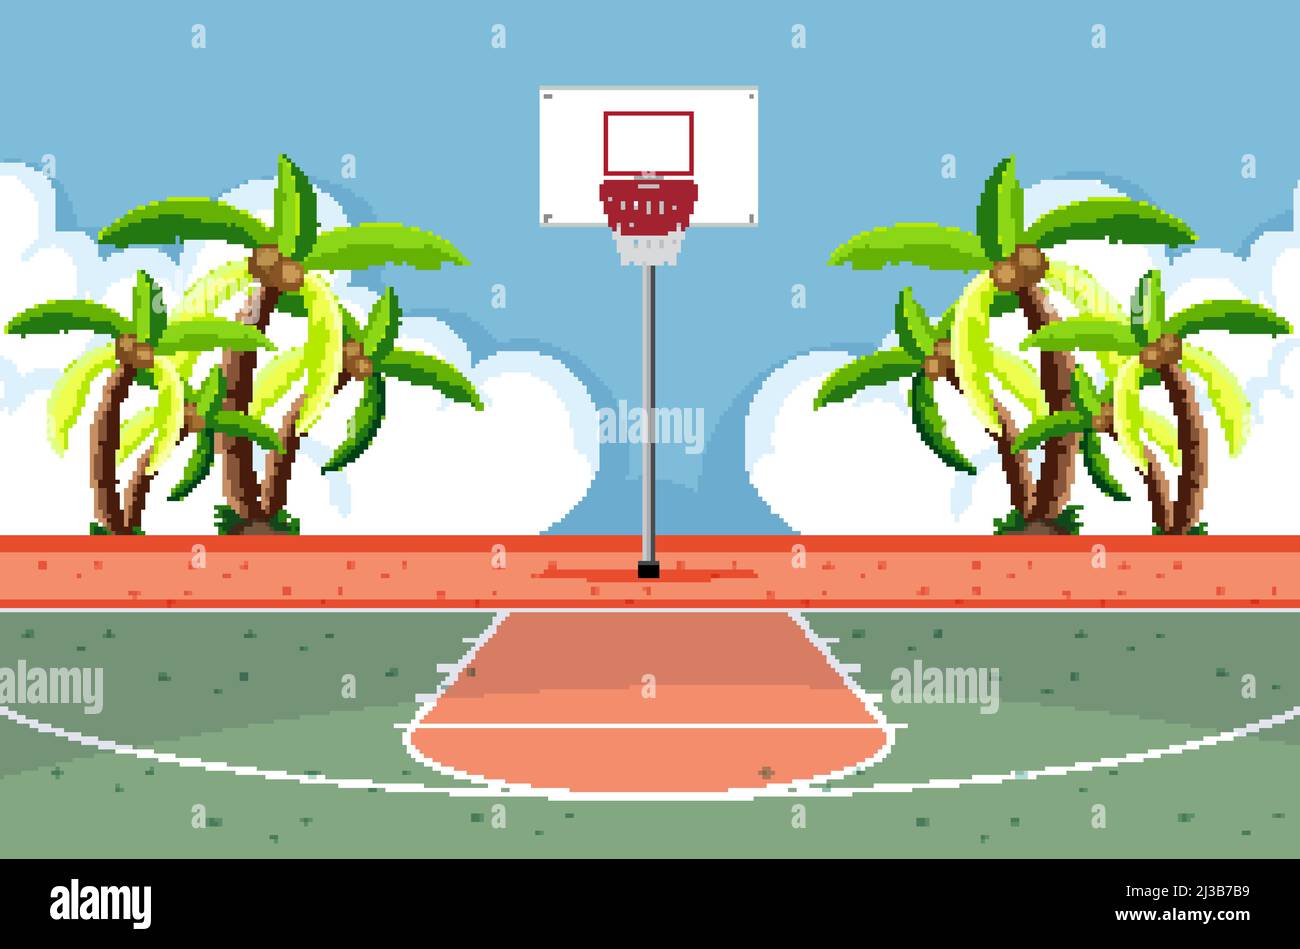 Empty basketball court scene illustration Stock Vector